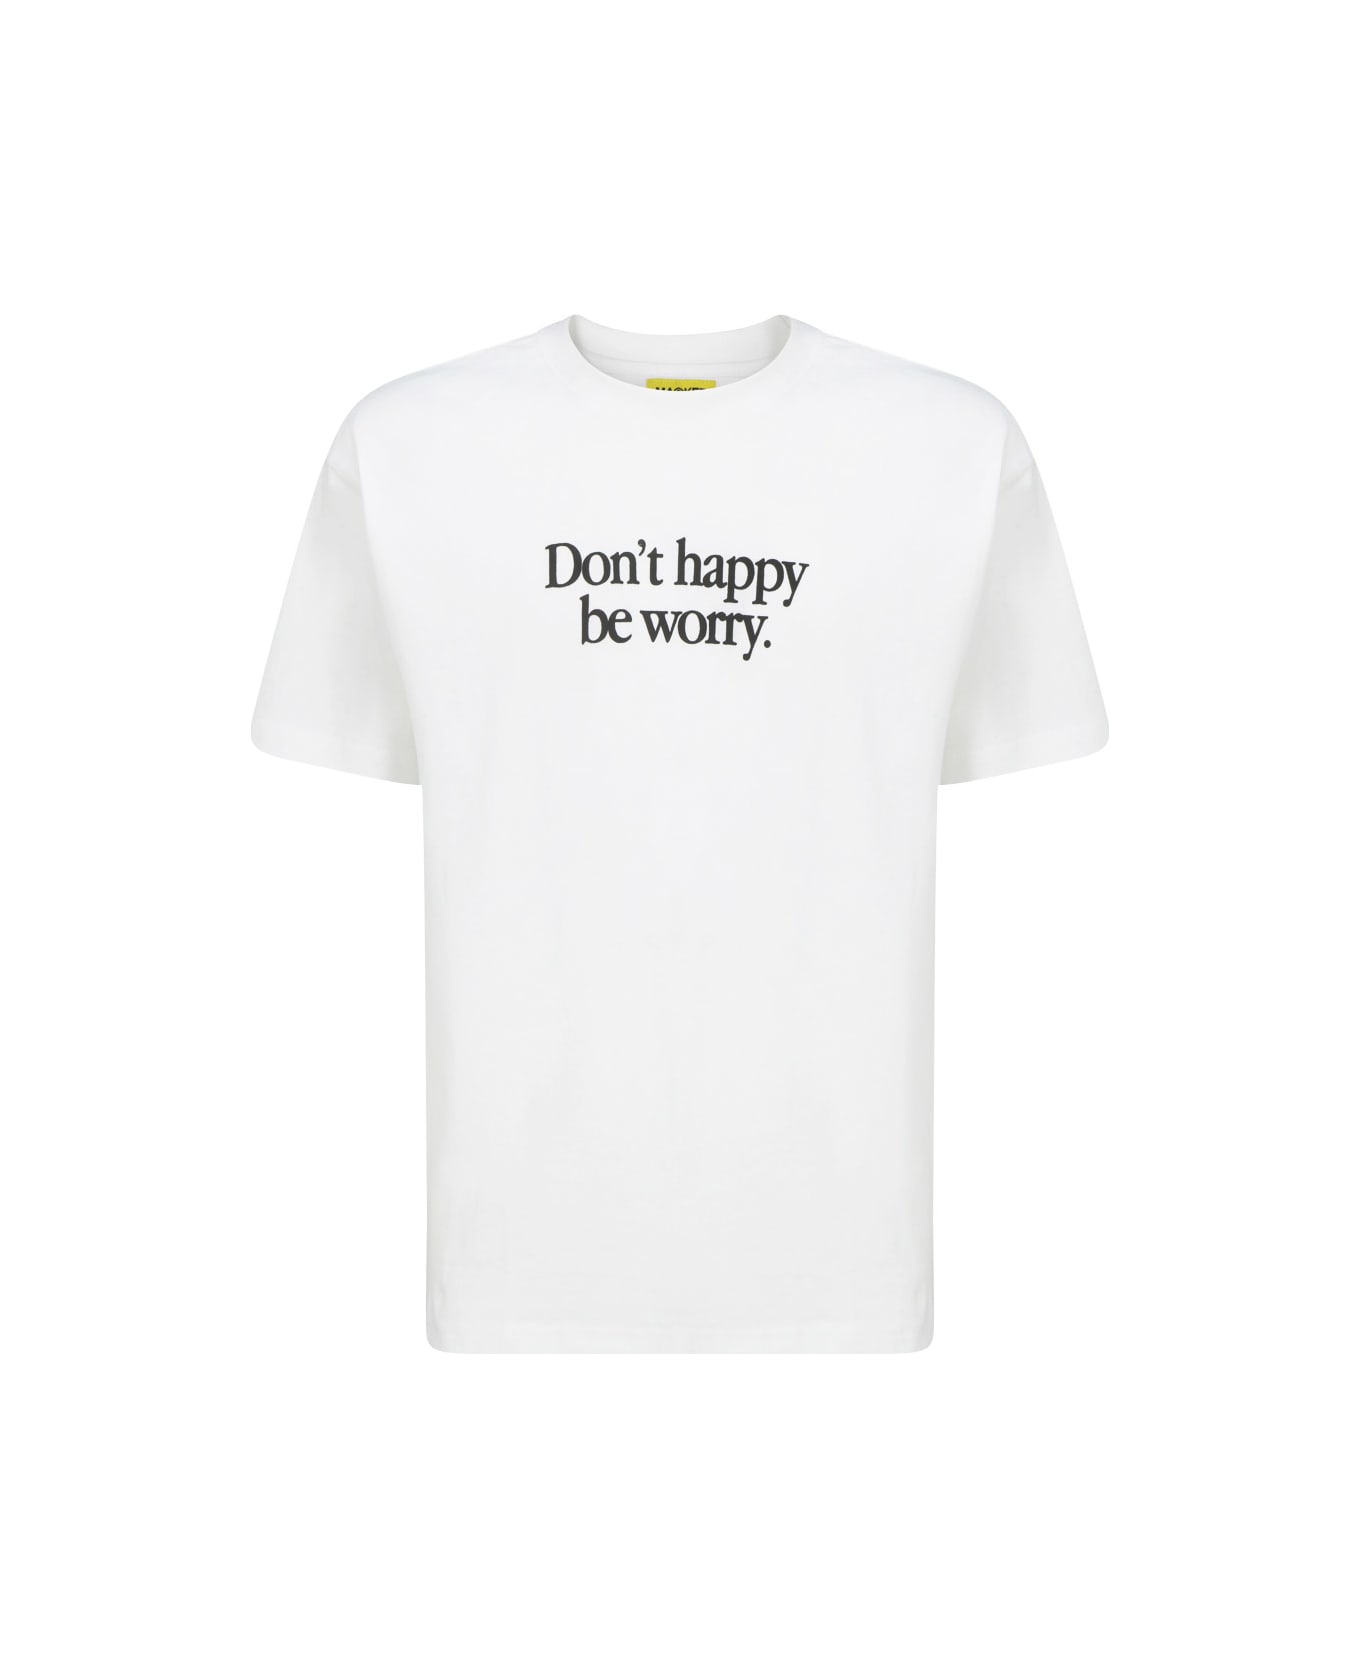 Market Smiley Earth T-shirt - WHITE